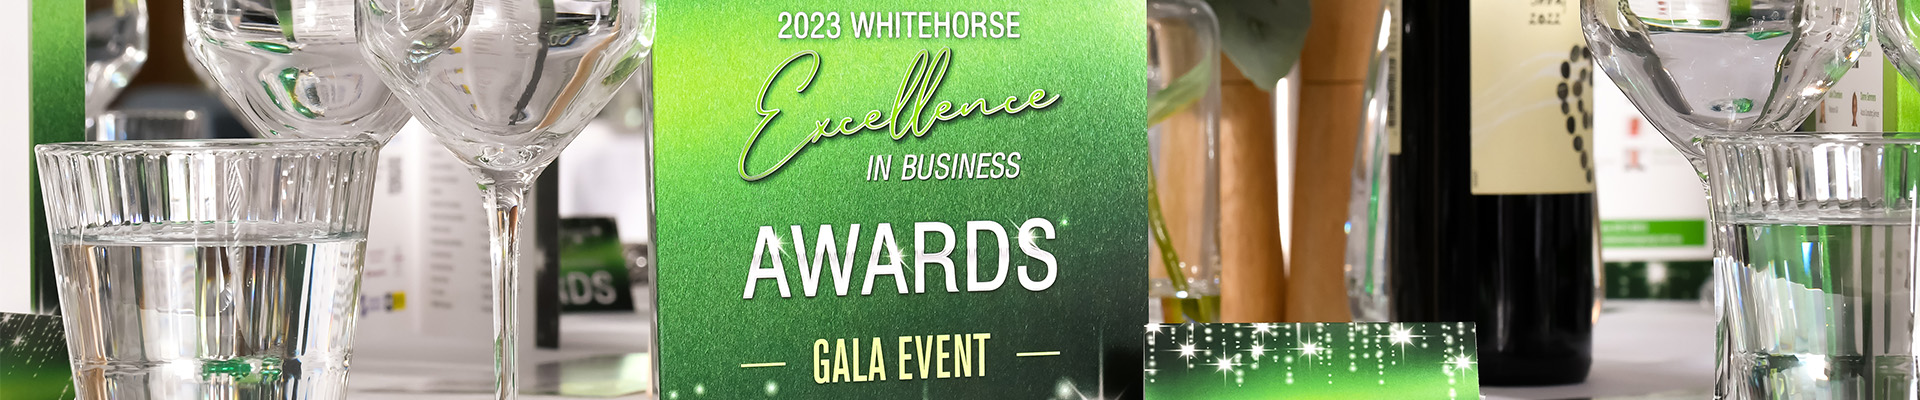 2022 Business Awards Gala Gallery